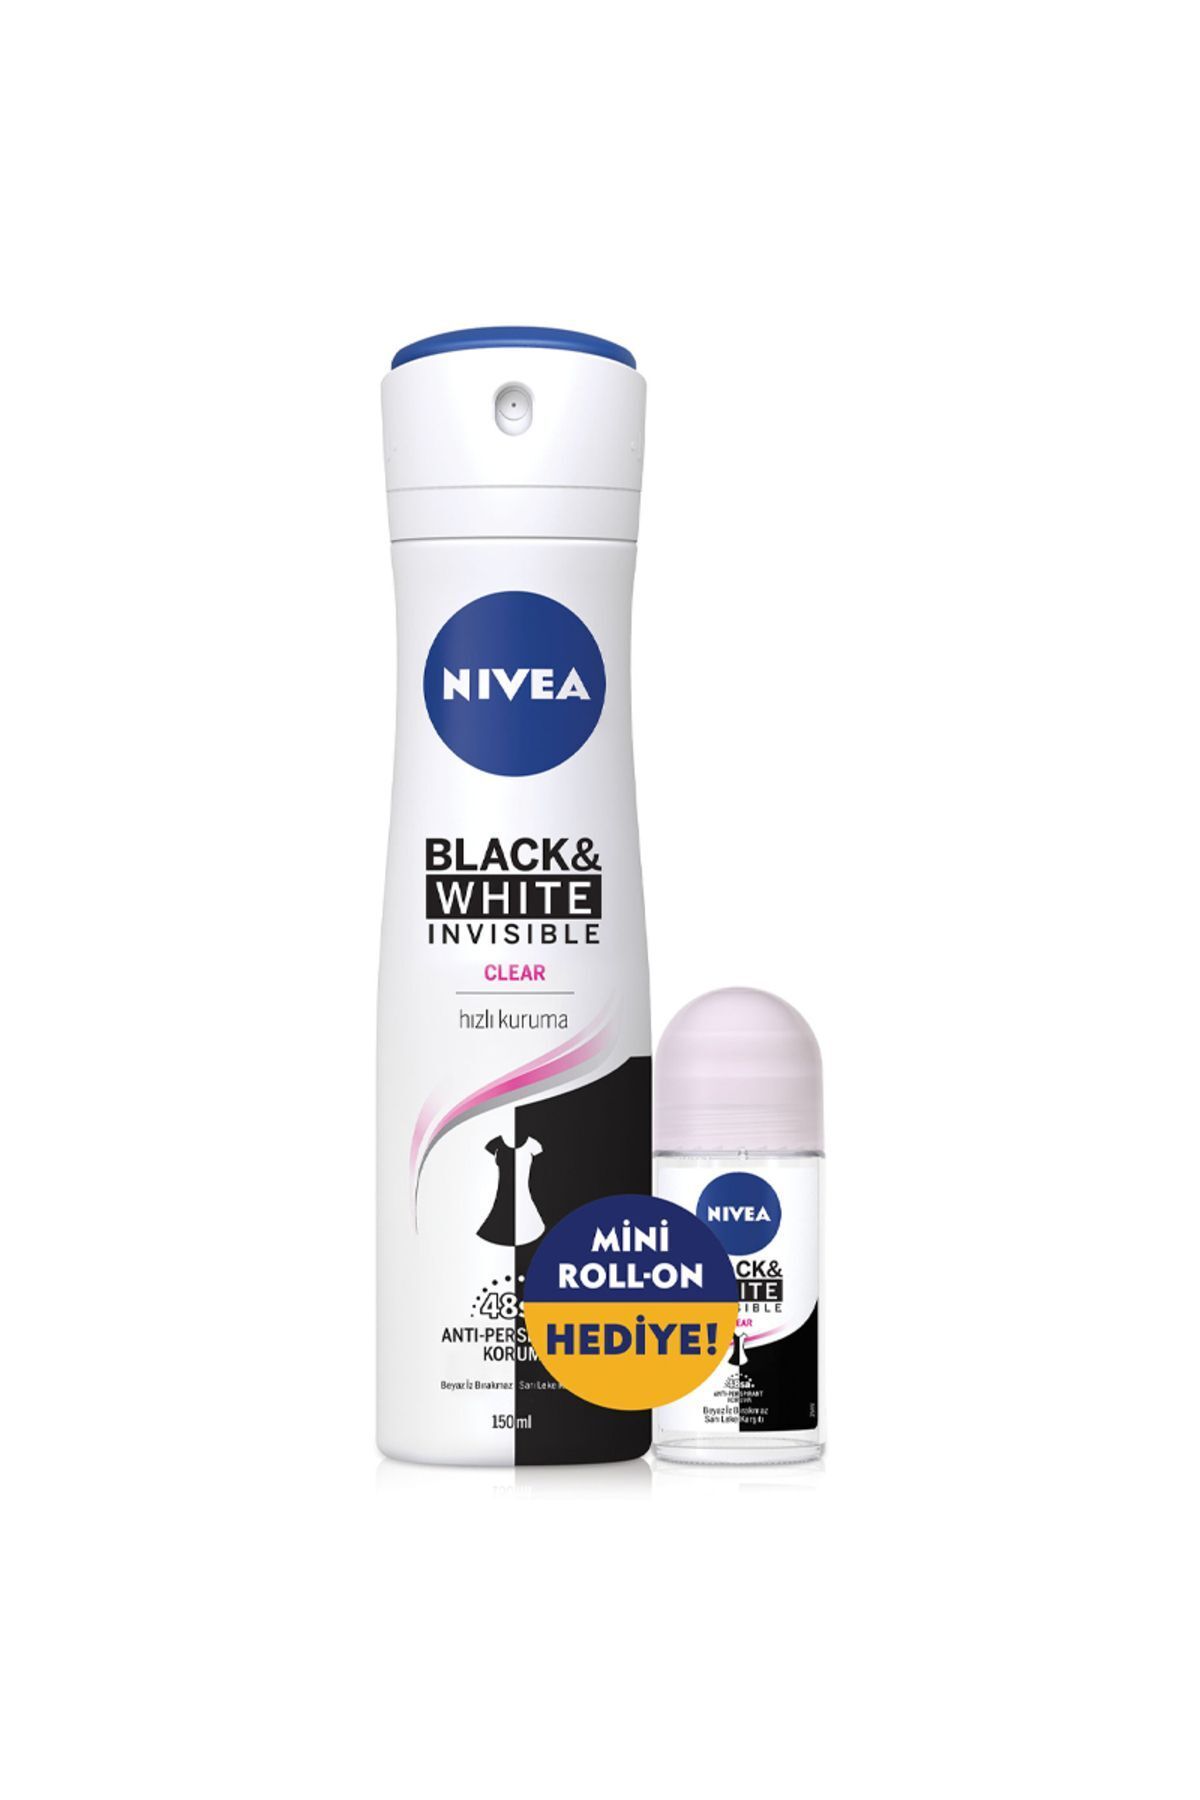 NIVEA Invisible Black & White Clear Kadın Deodorant Sprey 150 ml + Mini Roll-on 25 ml